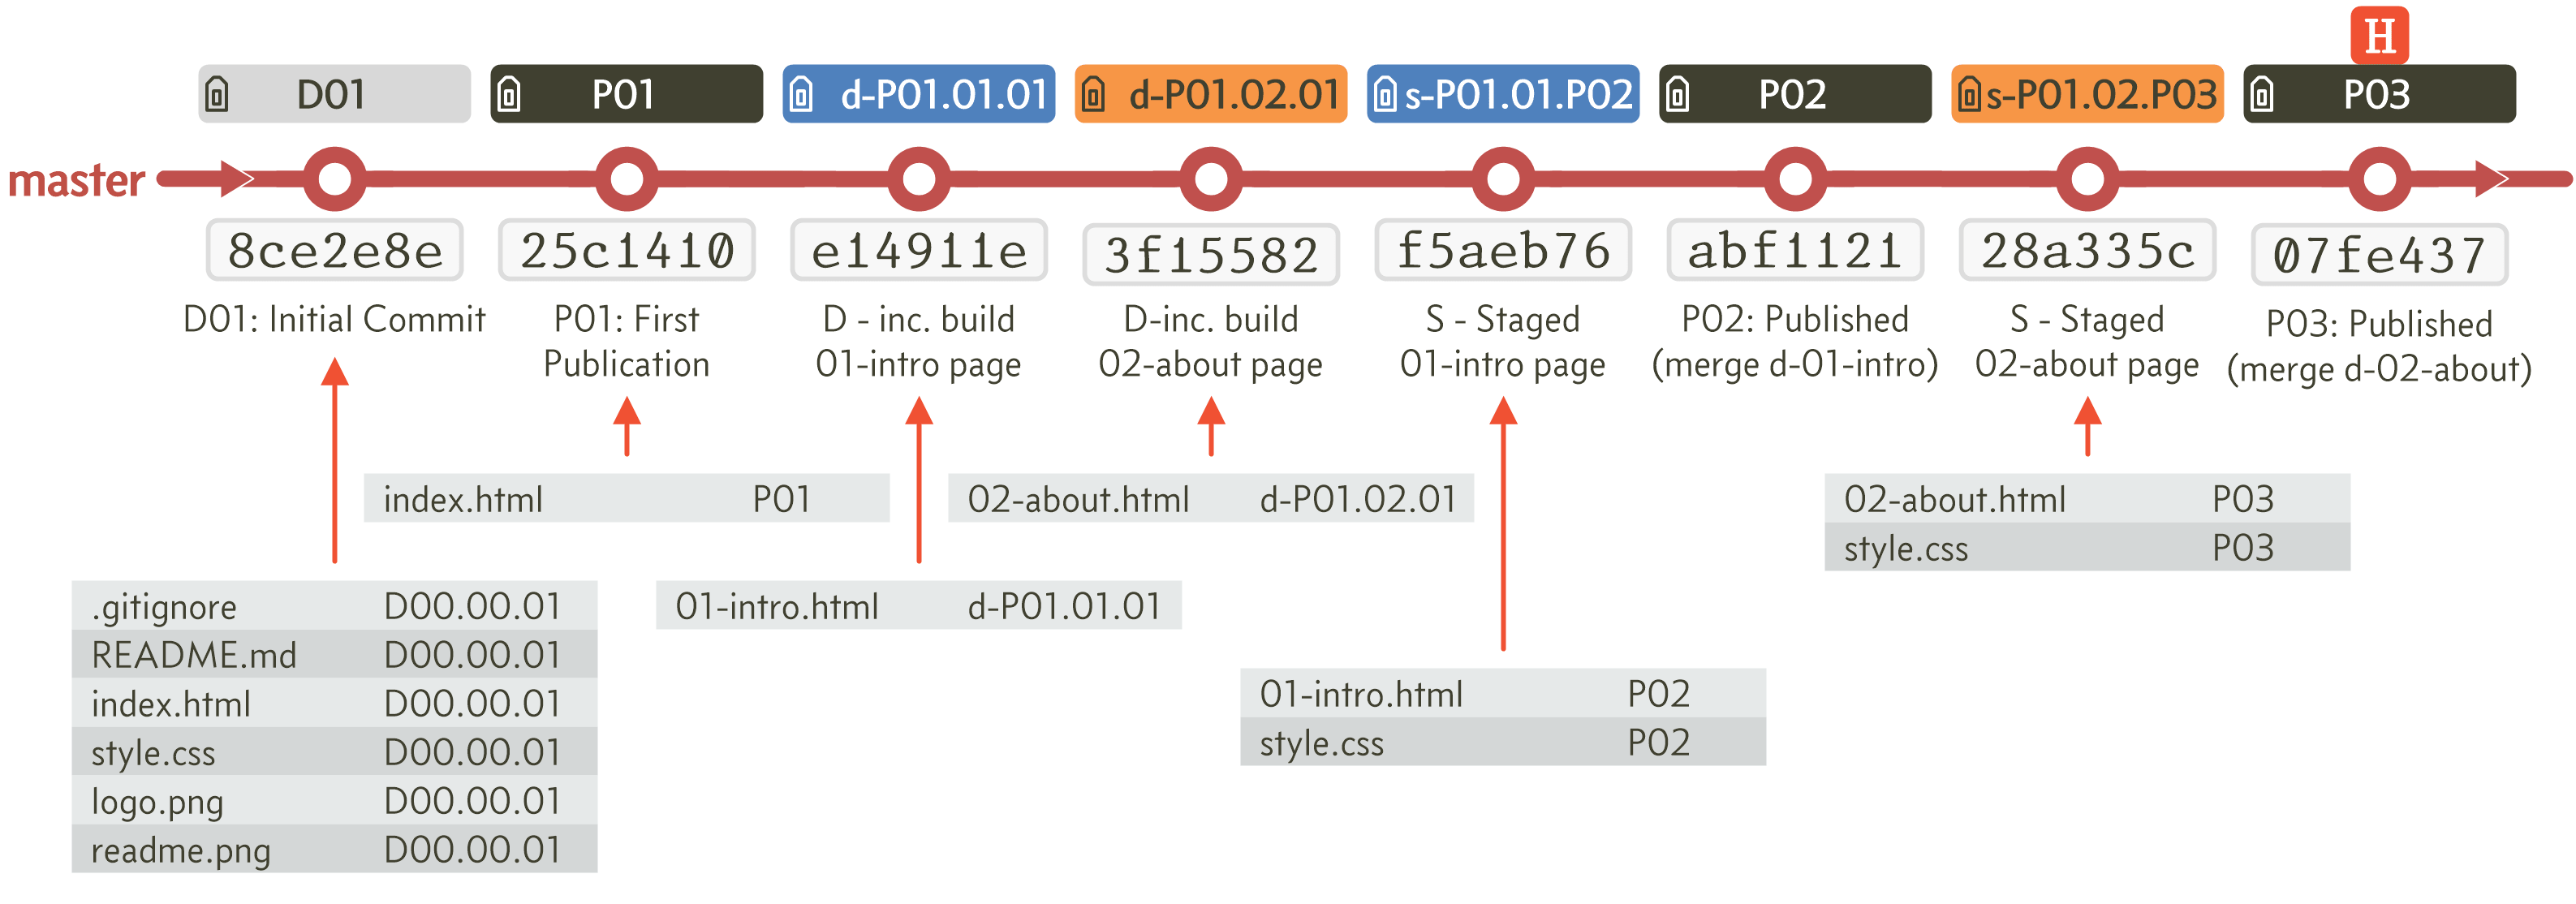 Figure 7.4 - Final arrangement, all merged back to master branch